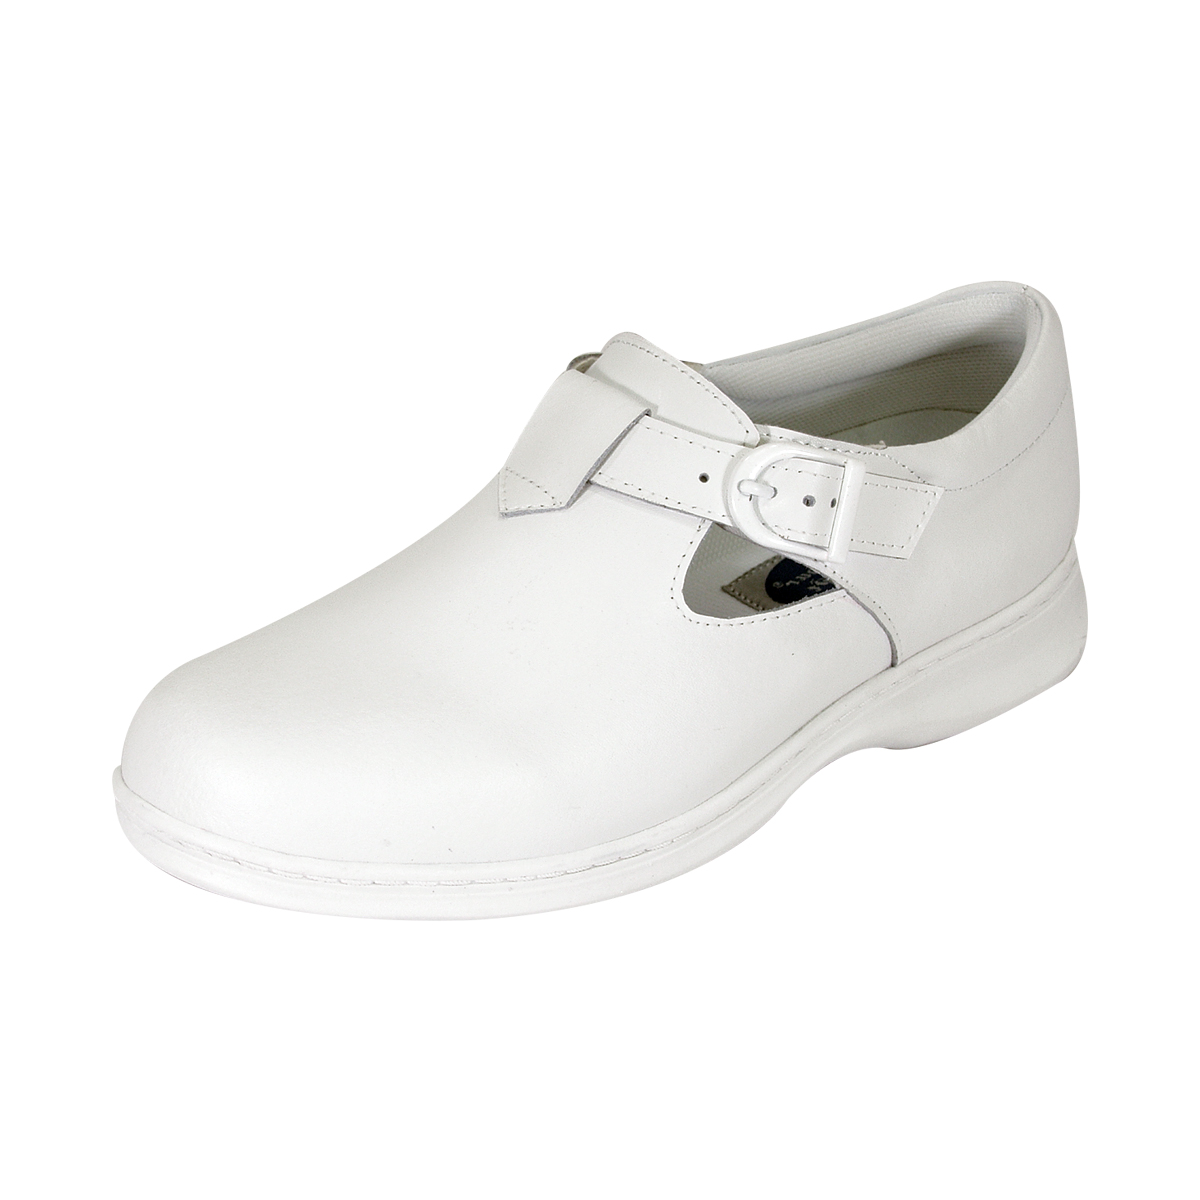 24 HOUR COMFORT Willa Wide Width Professional Sleek Shoe WHITE 12 - image 1 of 7